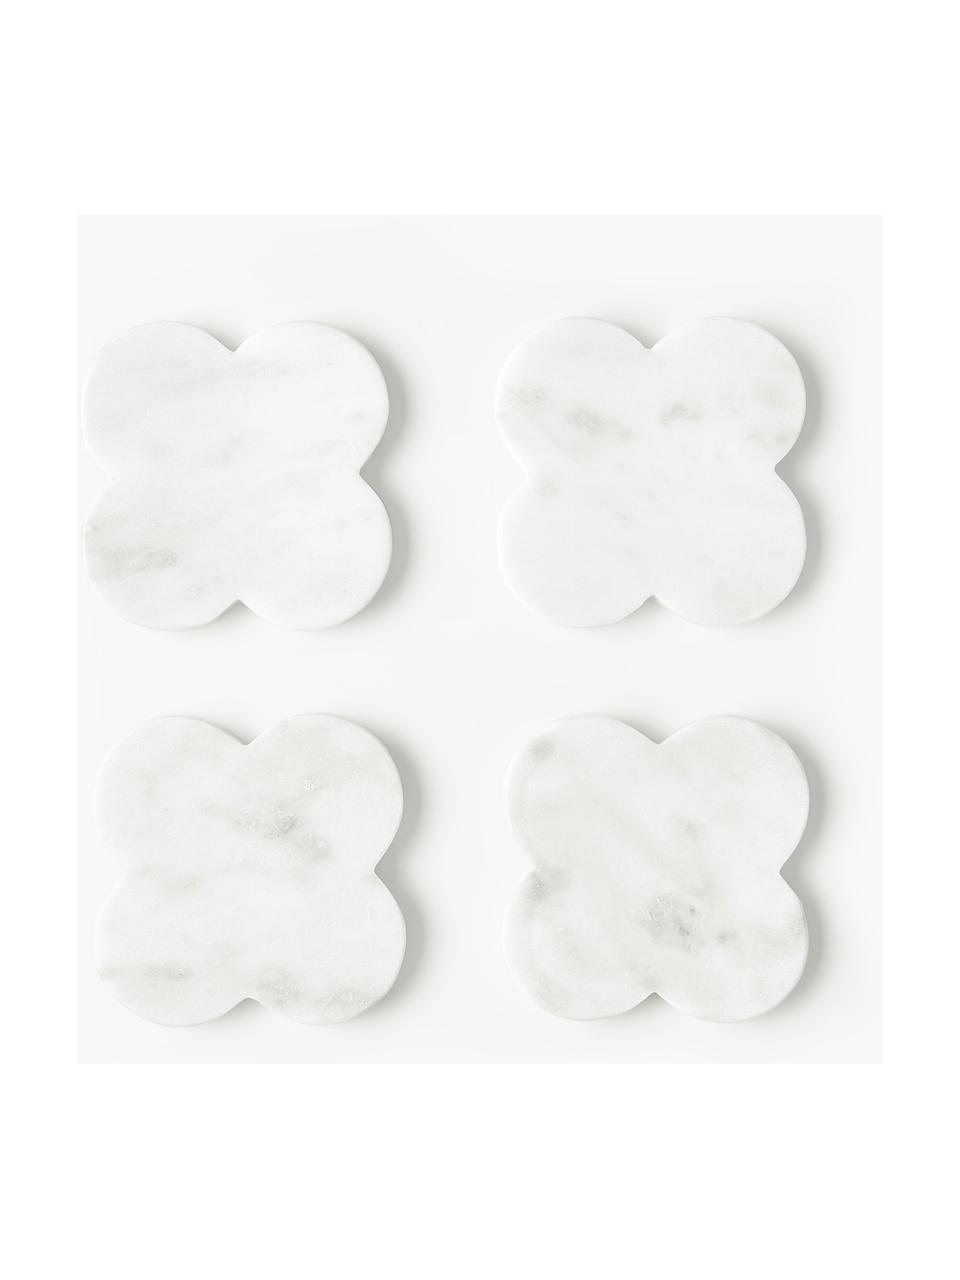 Sottobicchieri in marmo Teo 4 pz, Marmo, Bianco marmorizzato, Larg. 10 x Prof. 10 cm